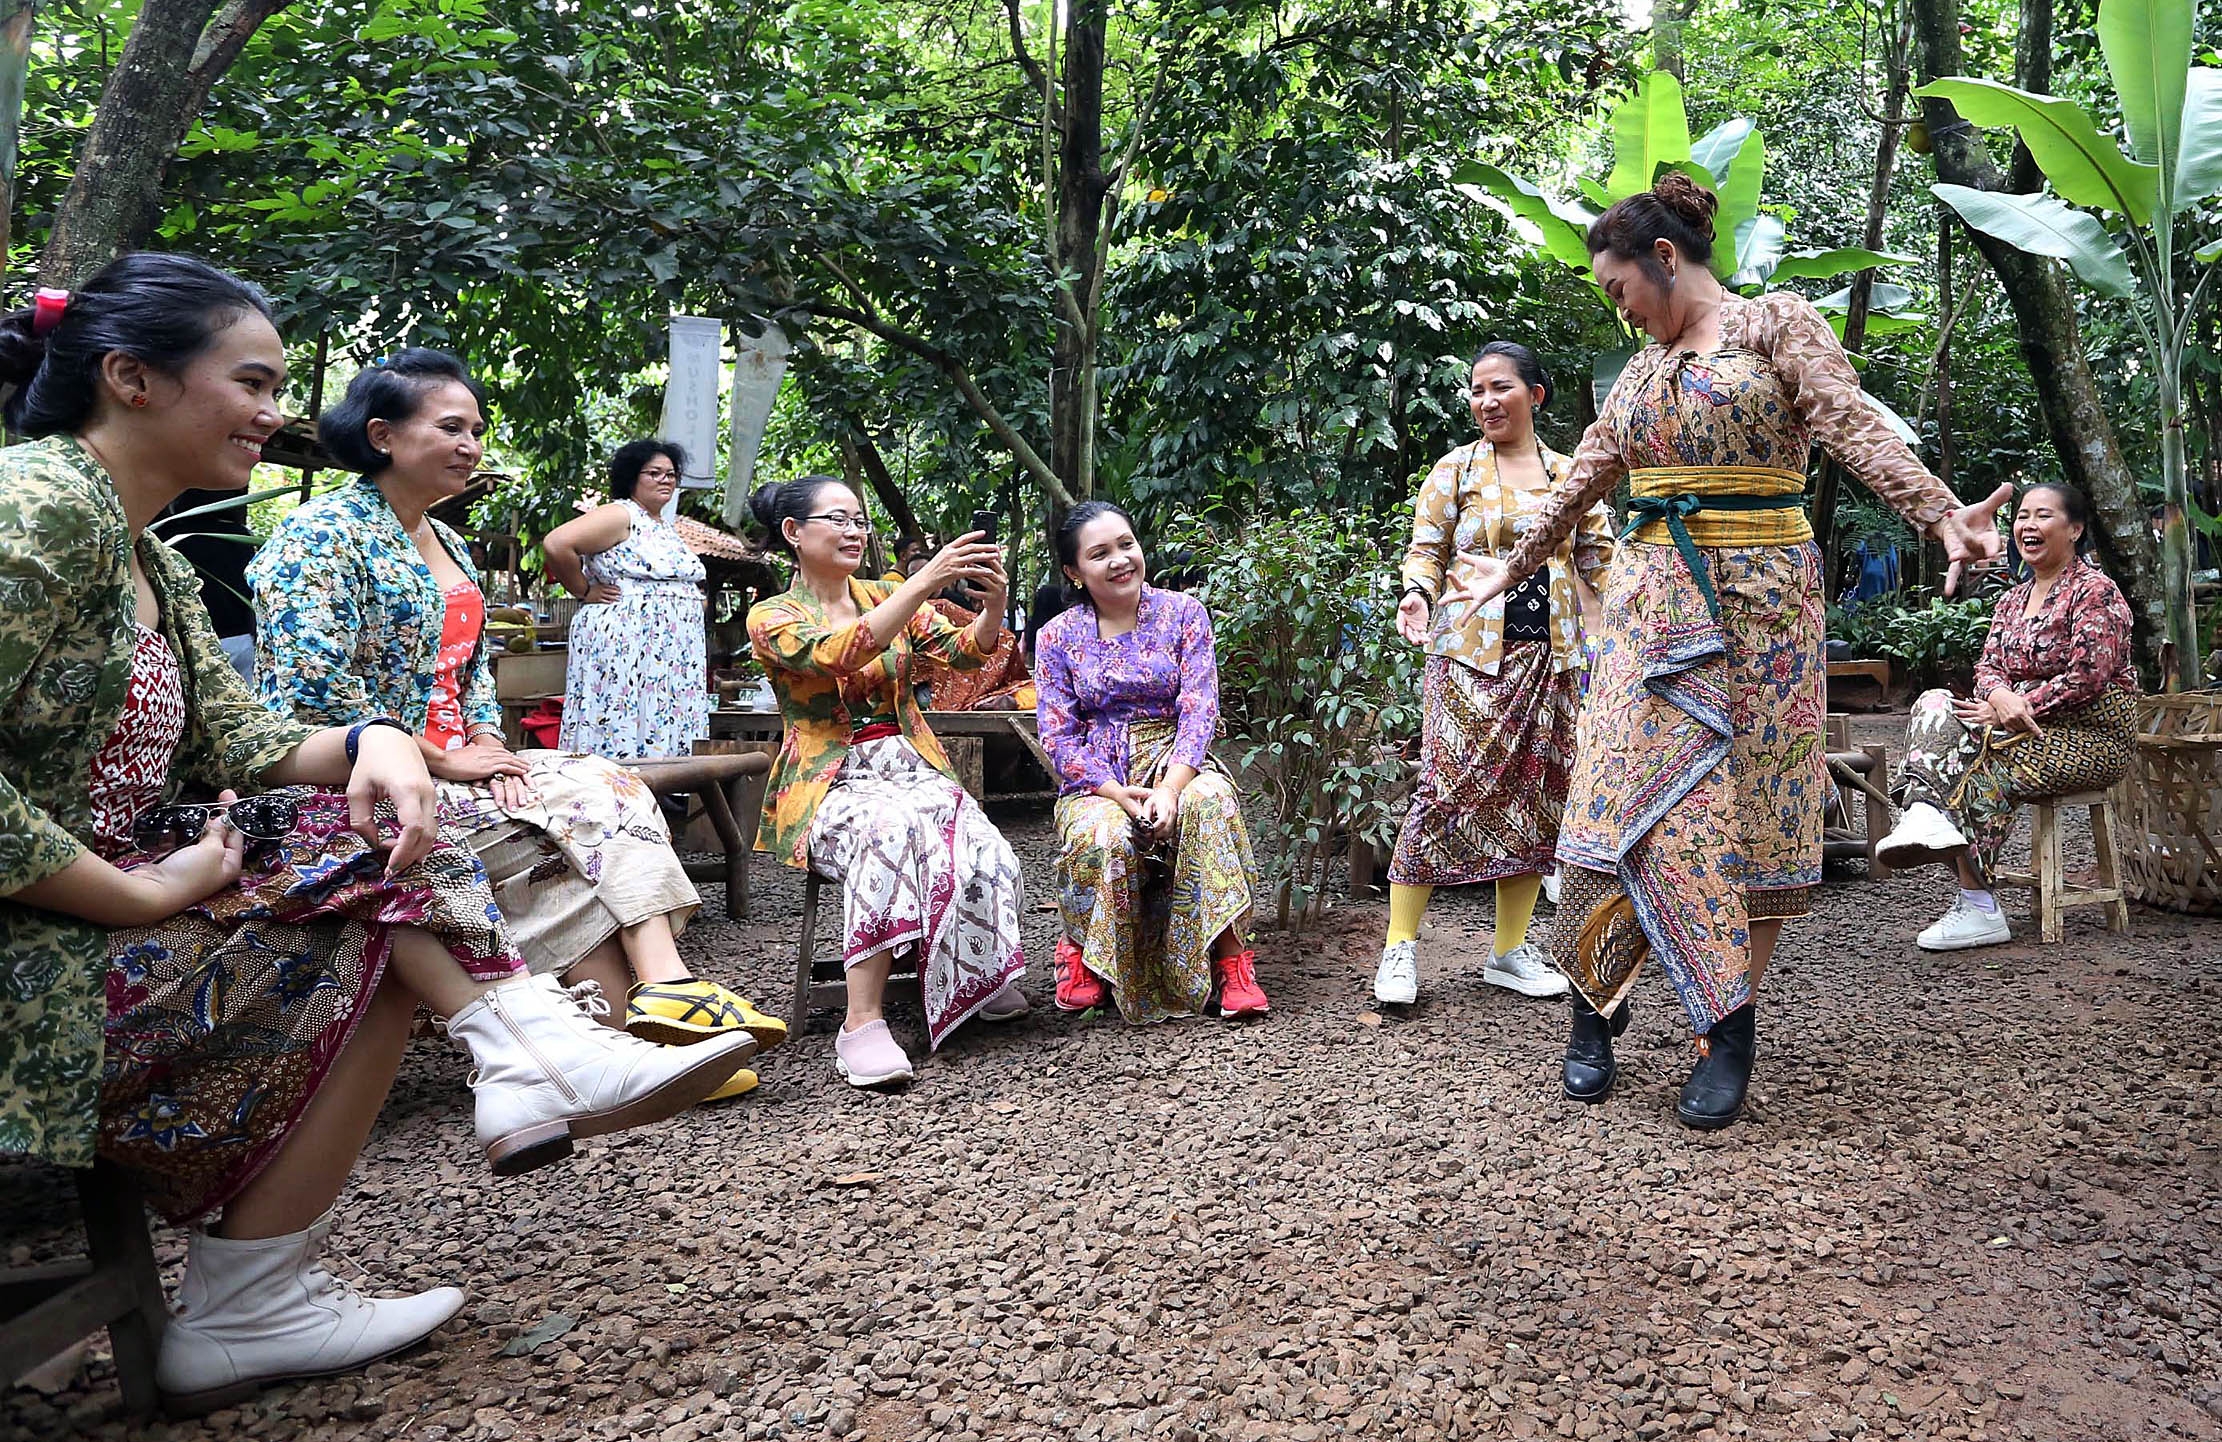 Sapawastra salah satu perkumpulan pecinta kain nusantara, menggelar kegiatan kampanye melestarikan batik yang dilaksanakan dalam rangka Hari Batik Nasional setiap tanggal 2 Oktober. Acara berlangsung di BSD Tangerang. Foto : Panji Asmoro/TrenAsia